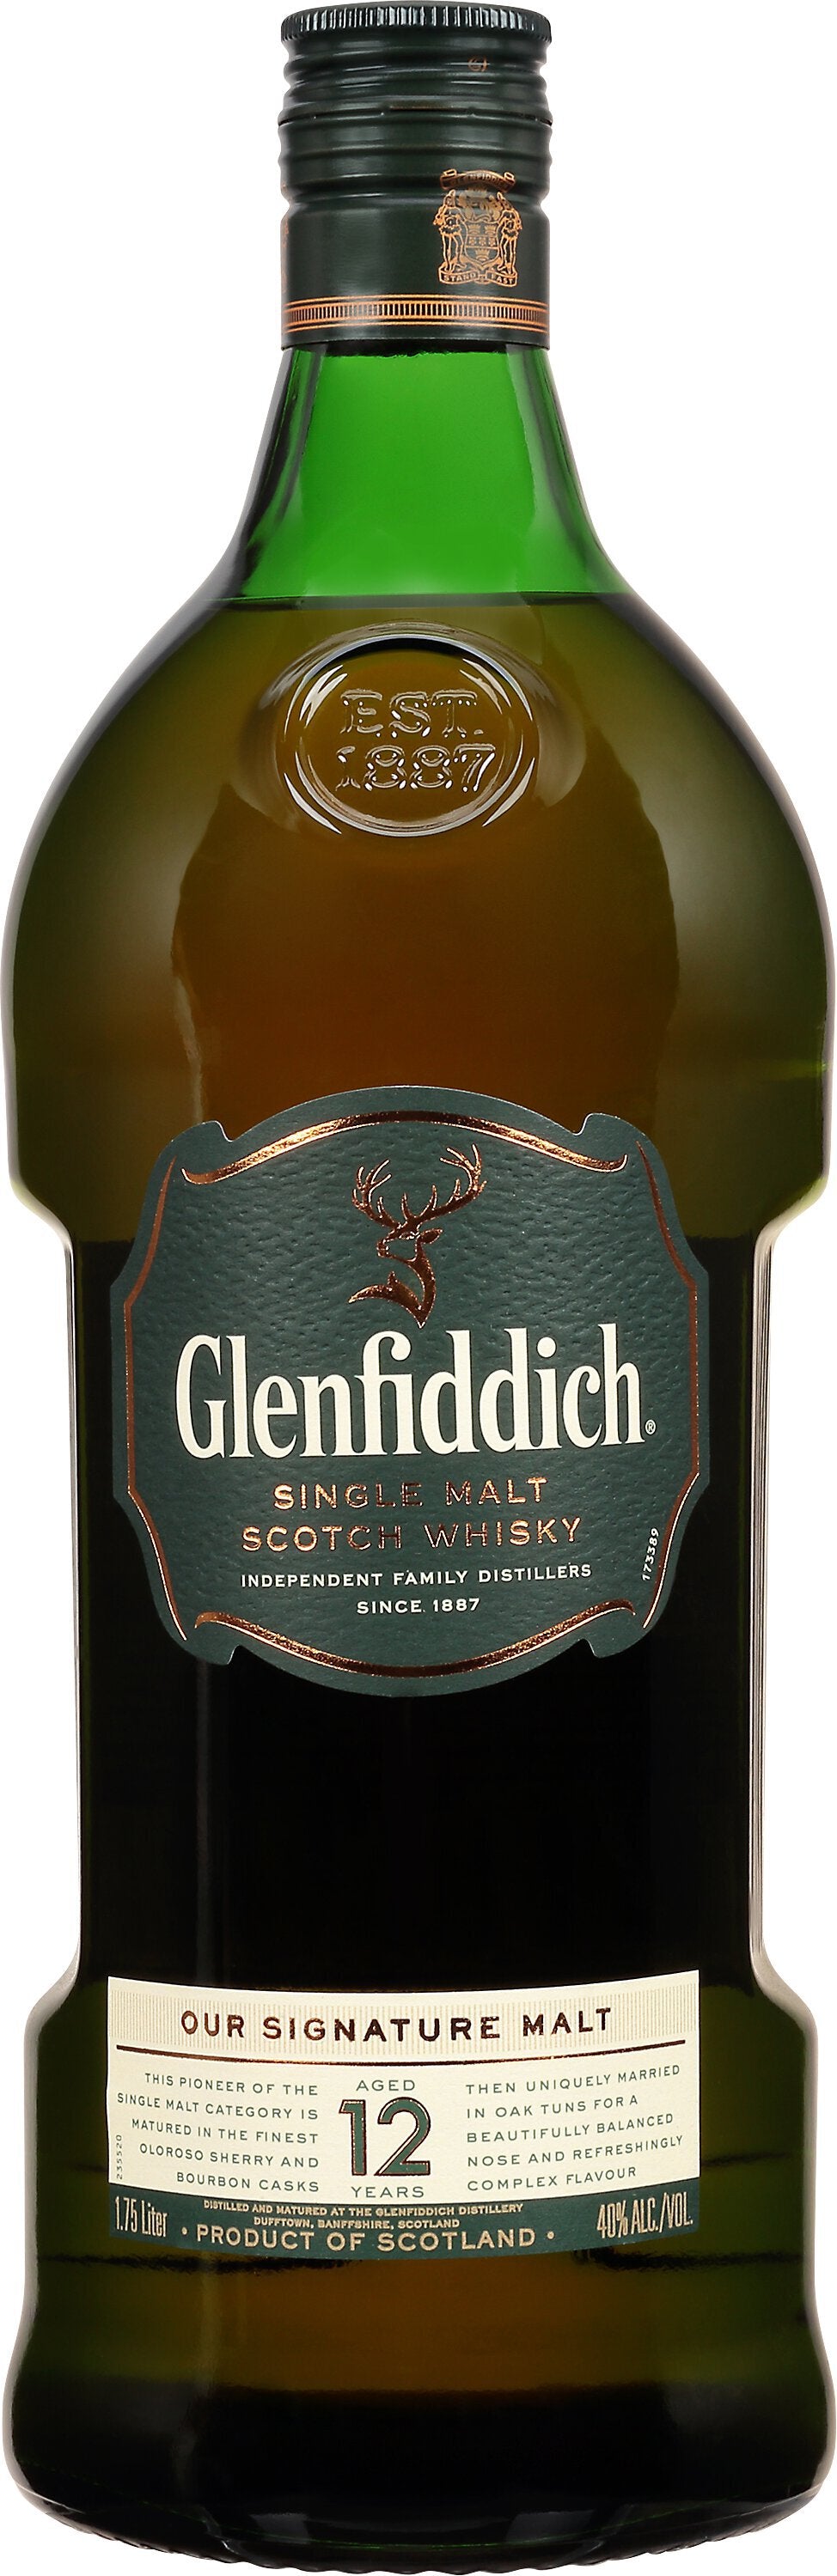 Glenfiddich 12 Year Old Single Malt Scotch Whisky 375ml